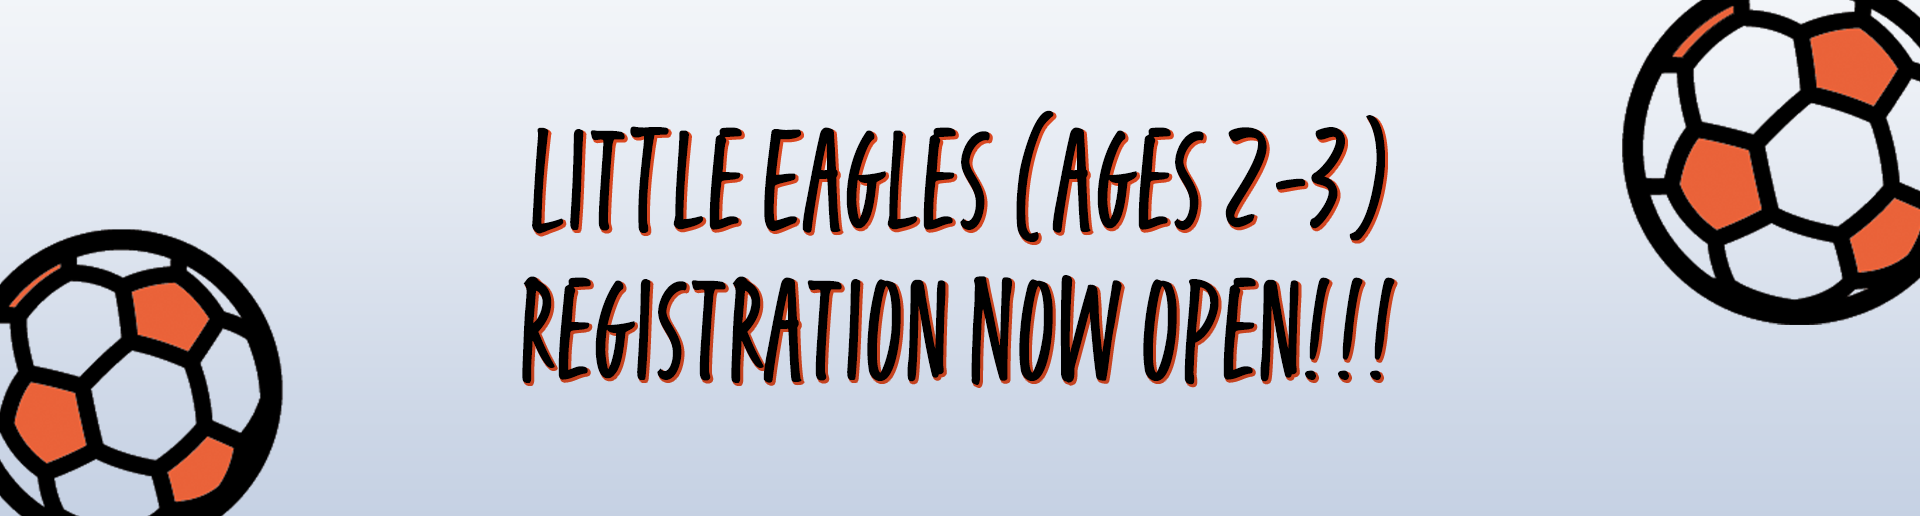 Little Eagles Registration NOW OPEN